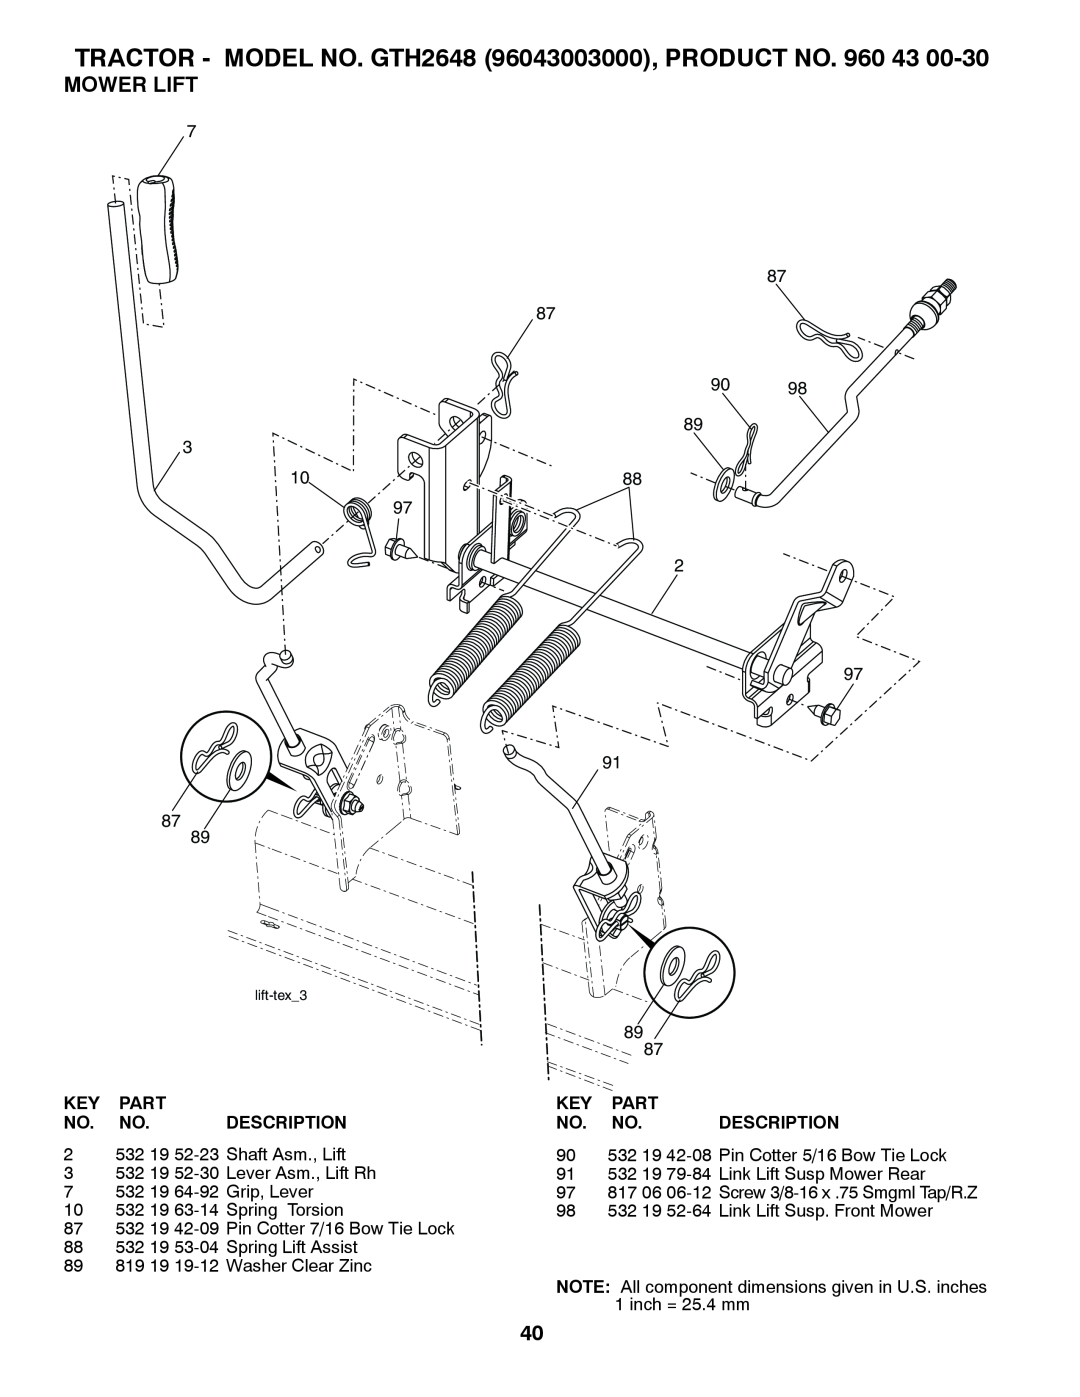 Husqvarna GTH2648 owner manual Mower Lift, Part, Description 